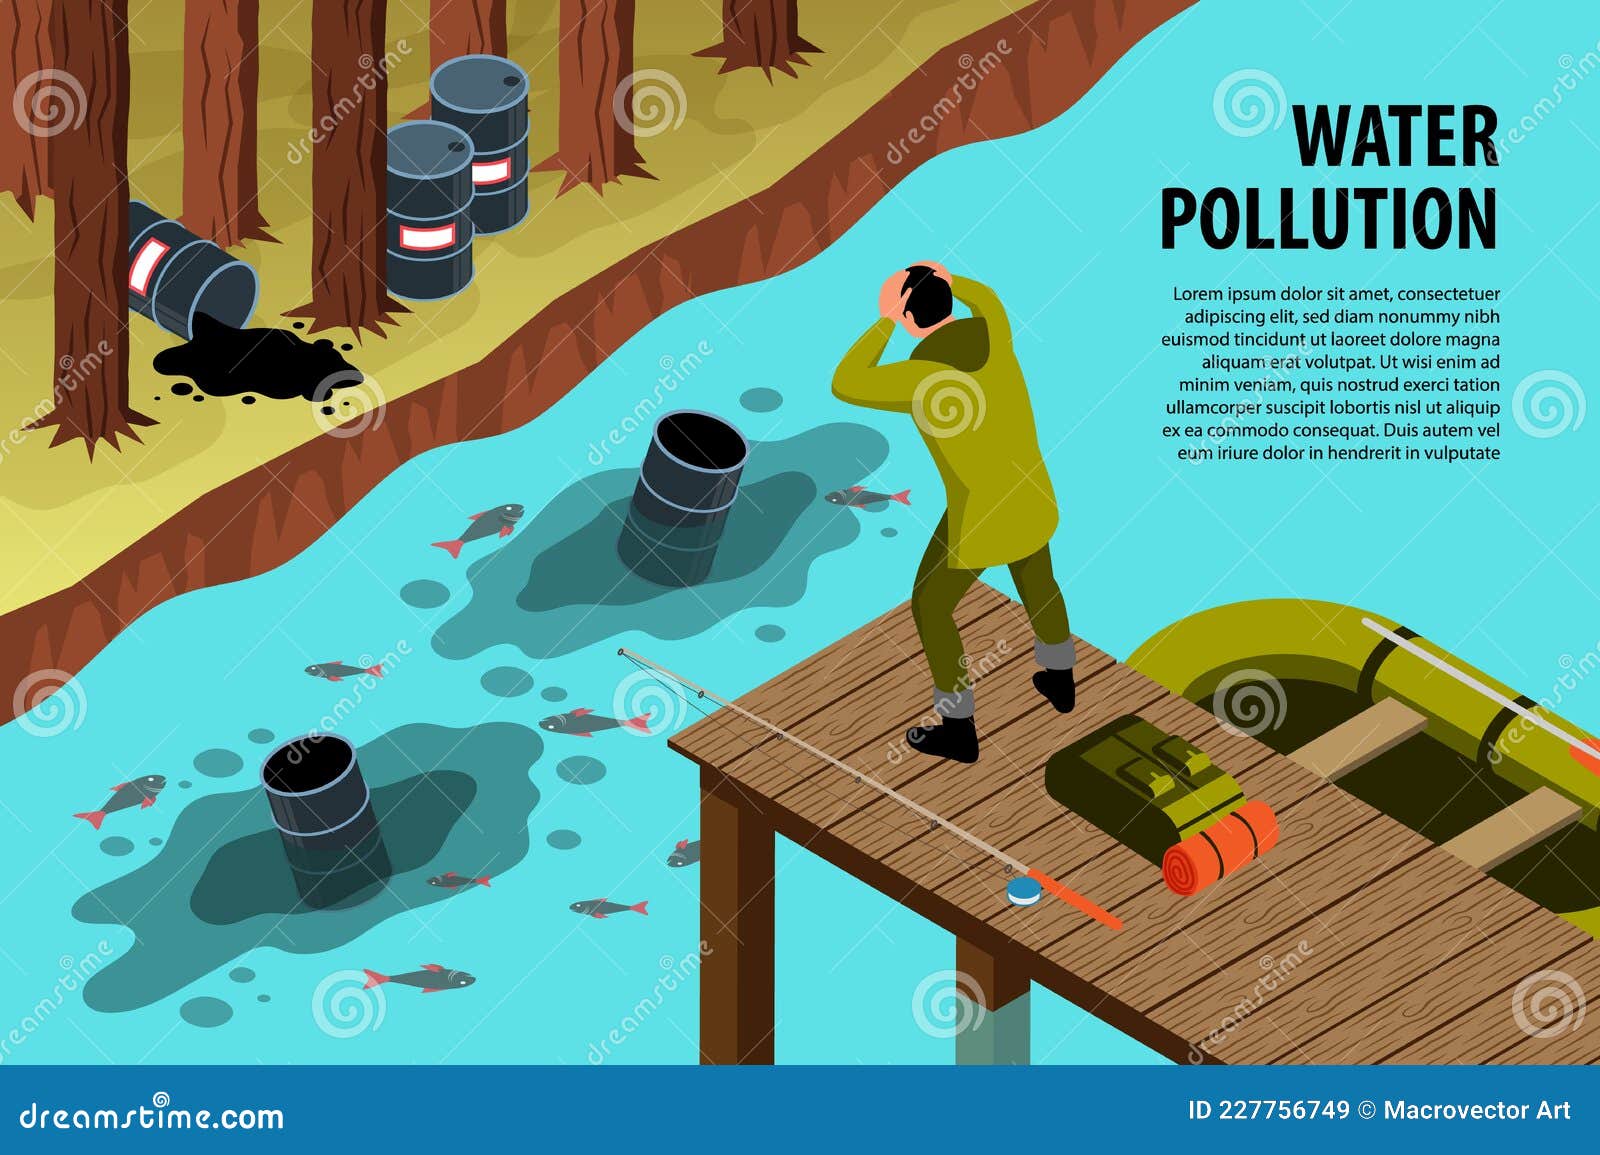 Leewardists - People waste water in their homes without... | Facebook